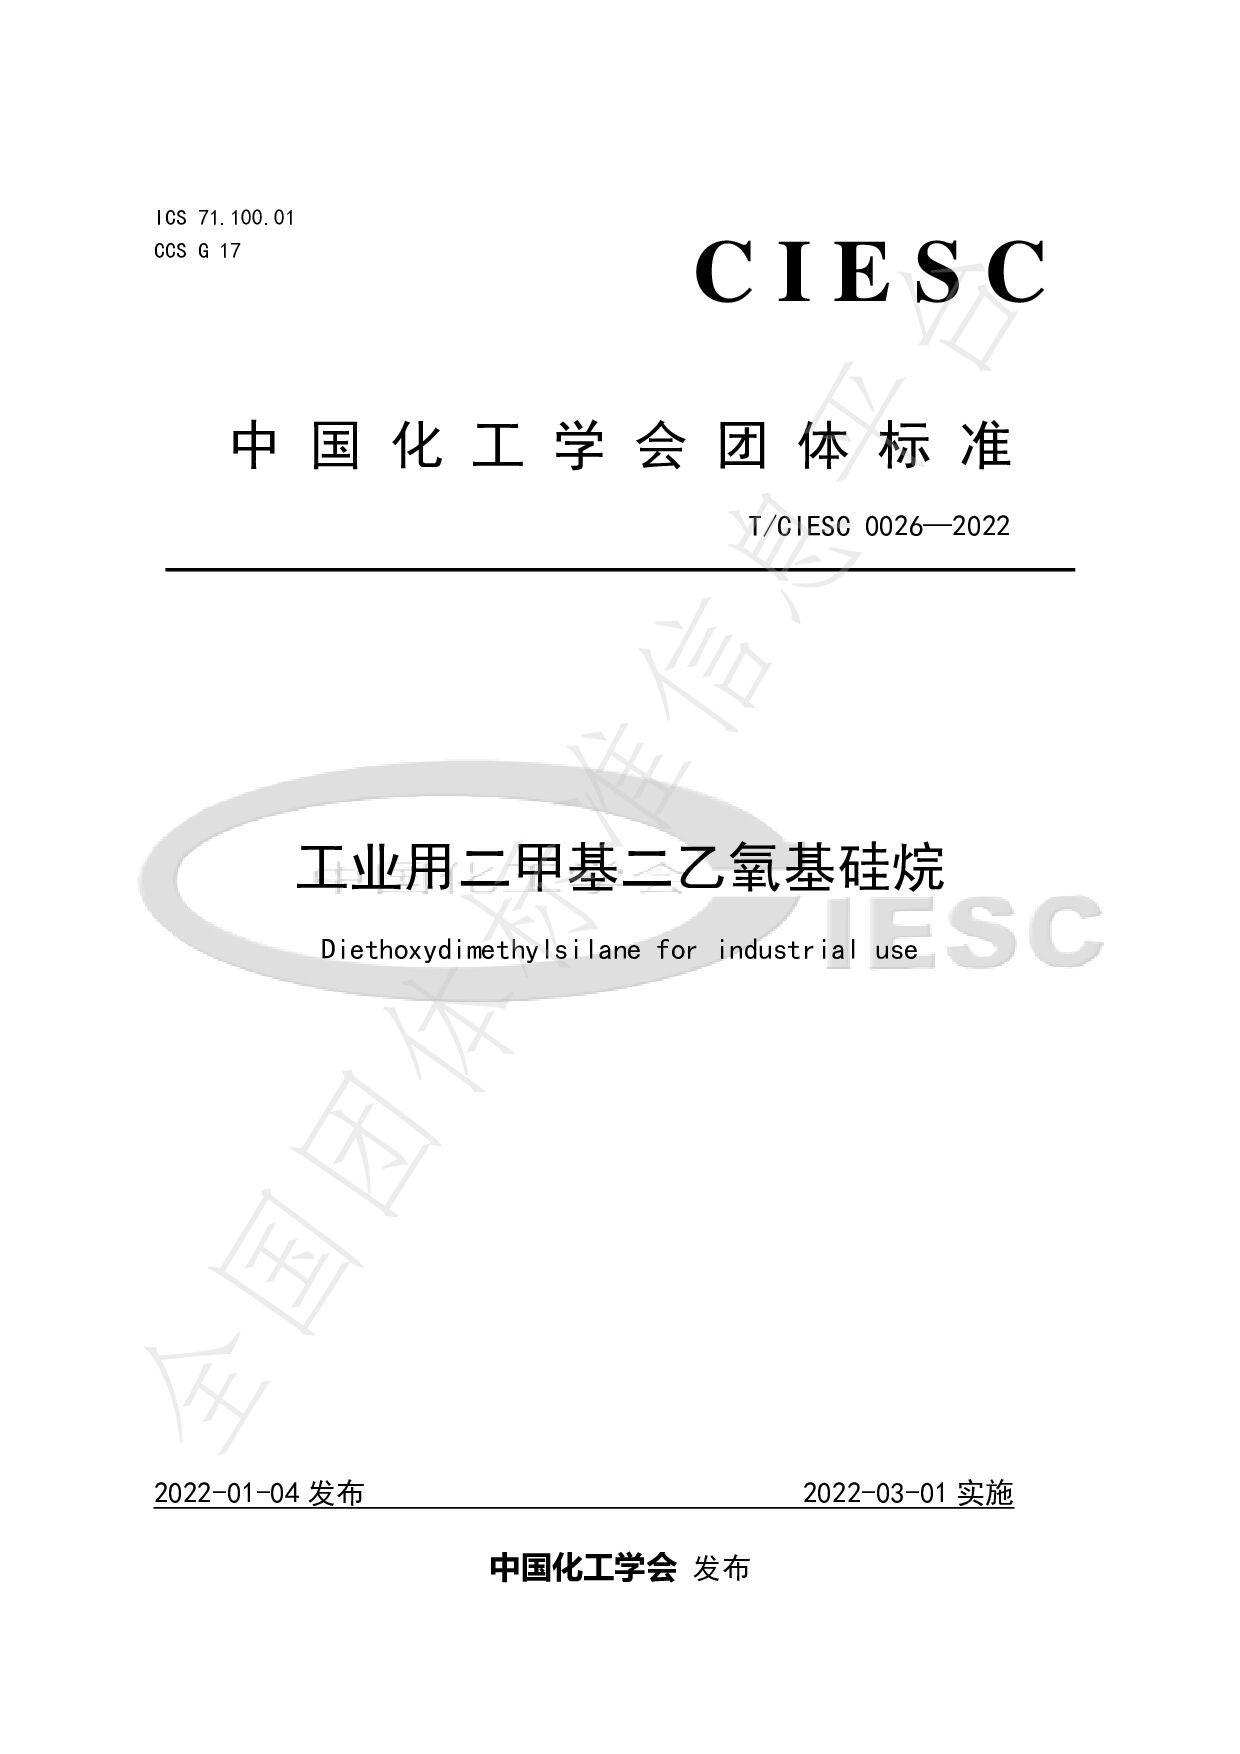 T/CIESC 0026-2022